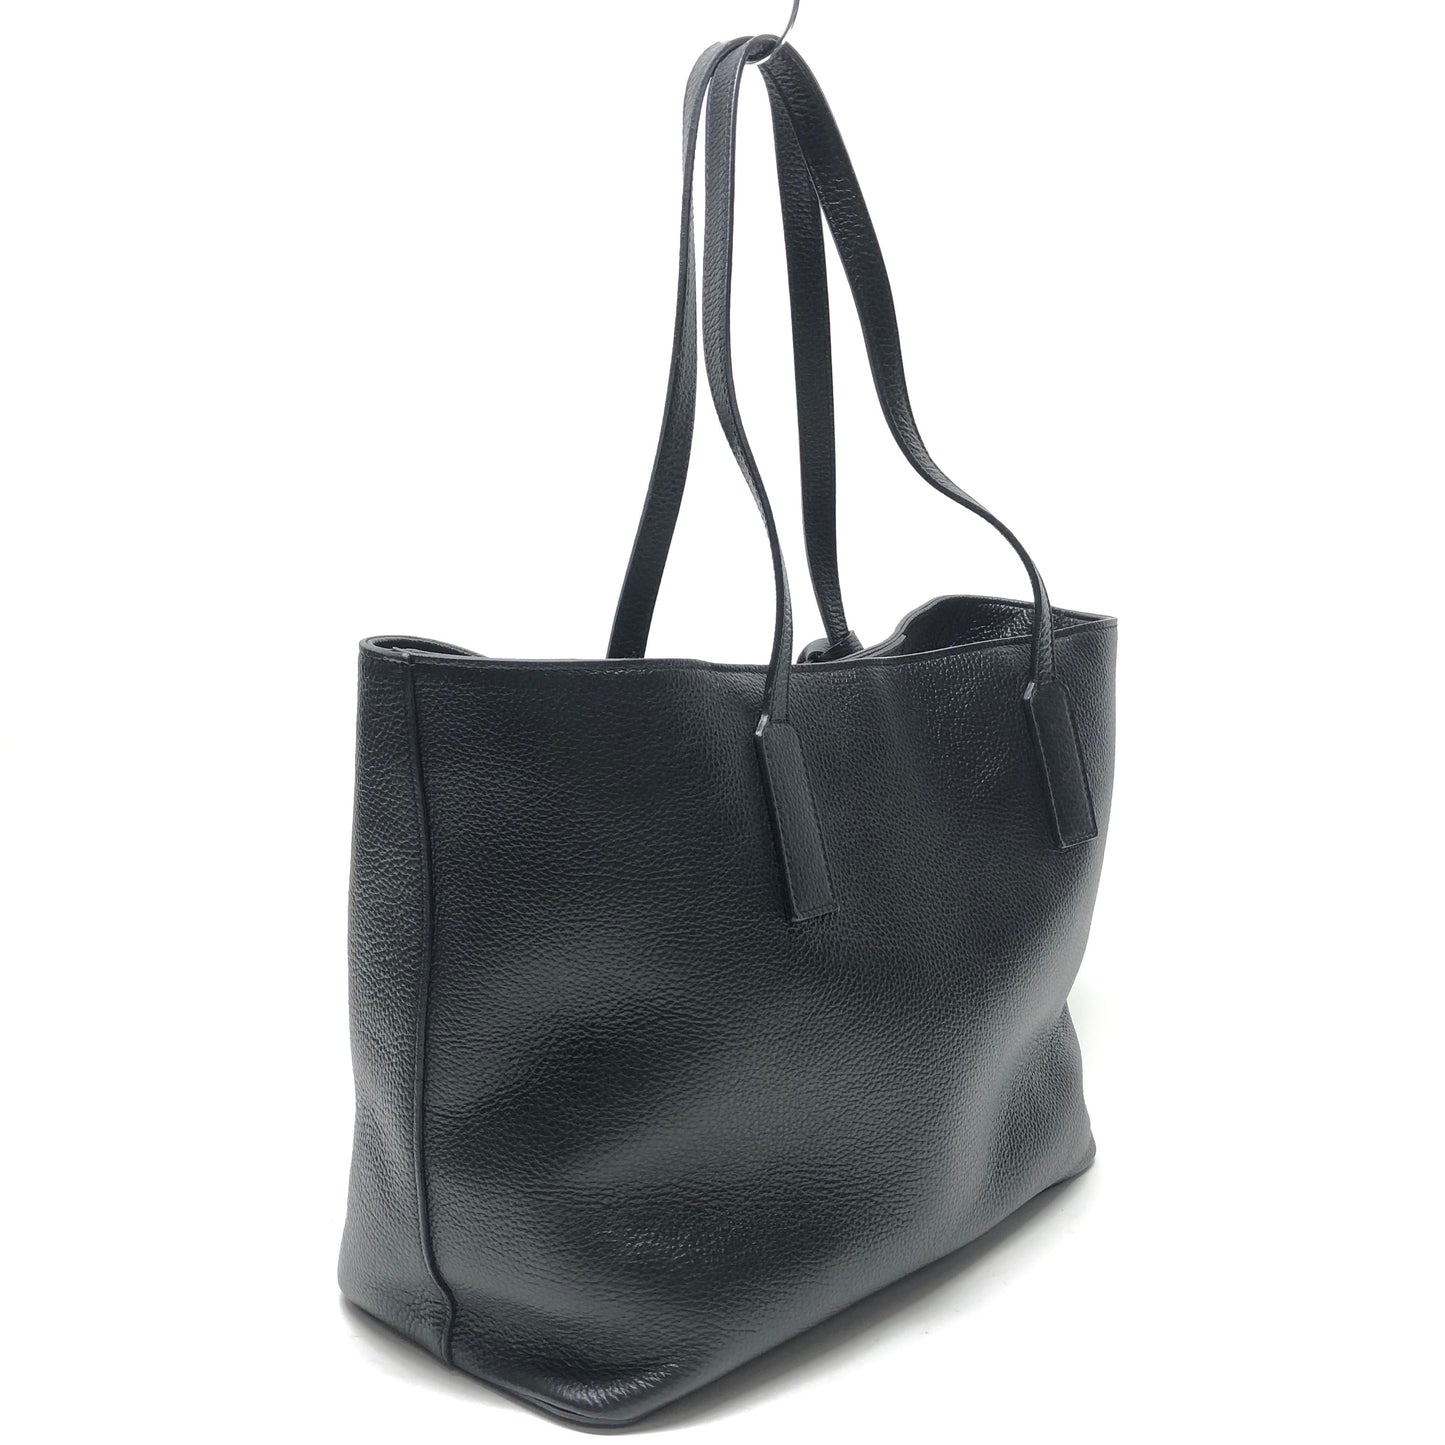 Handbag Designer Valentino-mario, Size Large